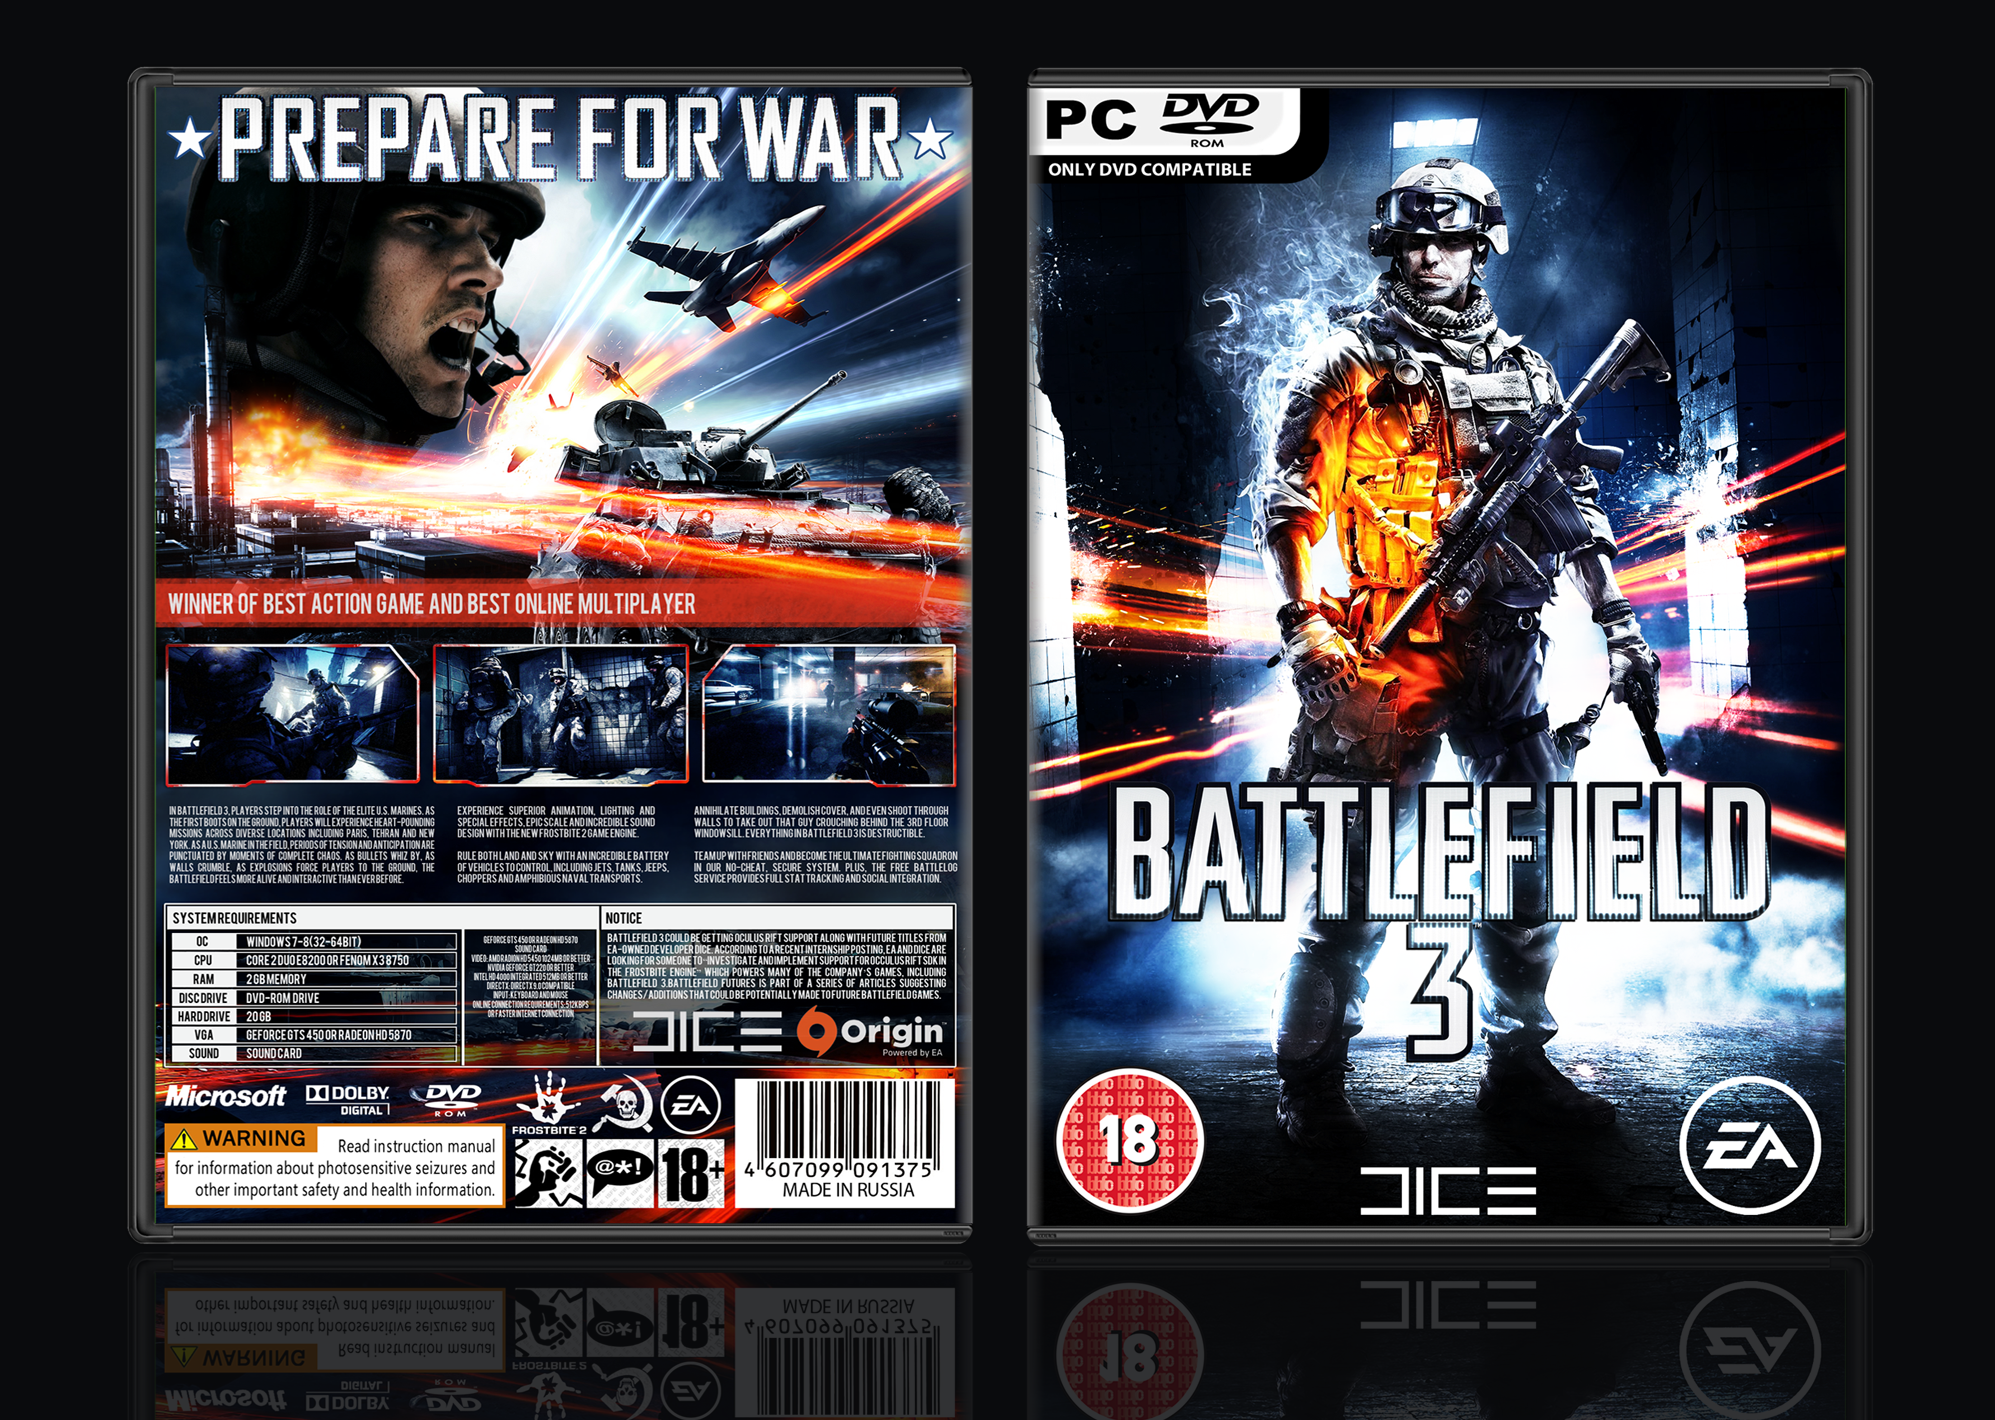 Бателфилд 3 от механика на русском. Battlefield 3 PC диск. PC DVD Battlefield 3. Бателфилд 3 системные требования. Battlefield 3 Cover.